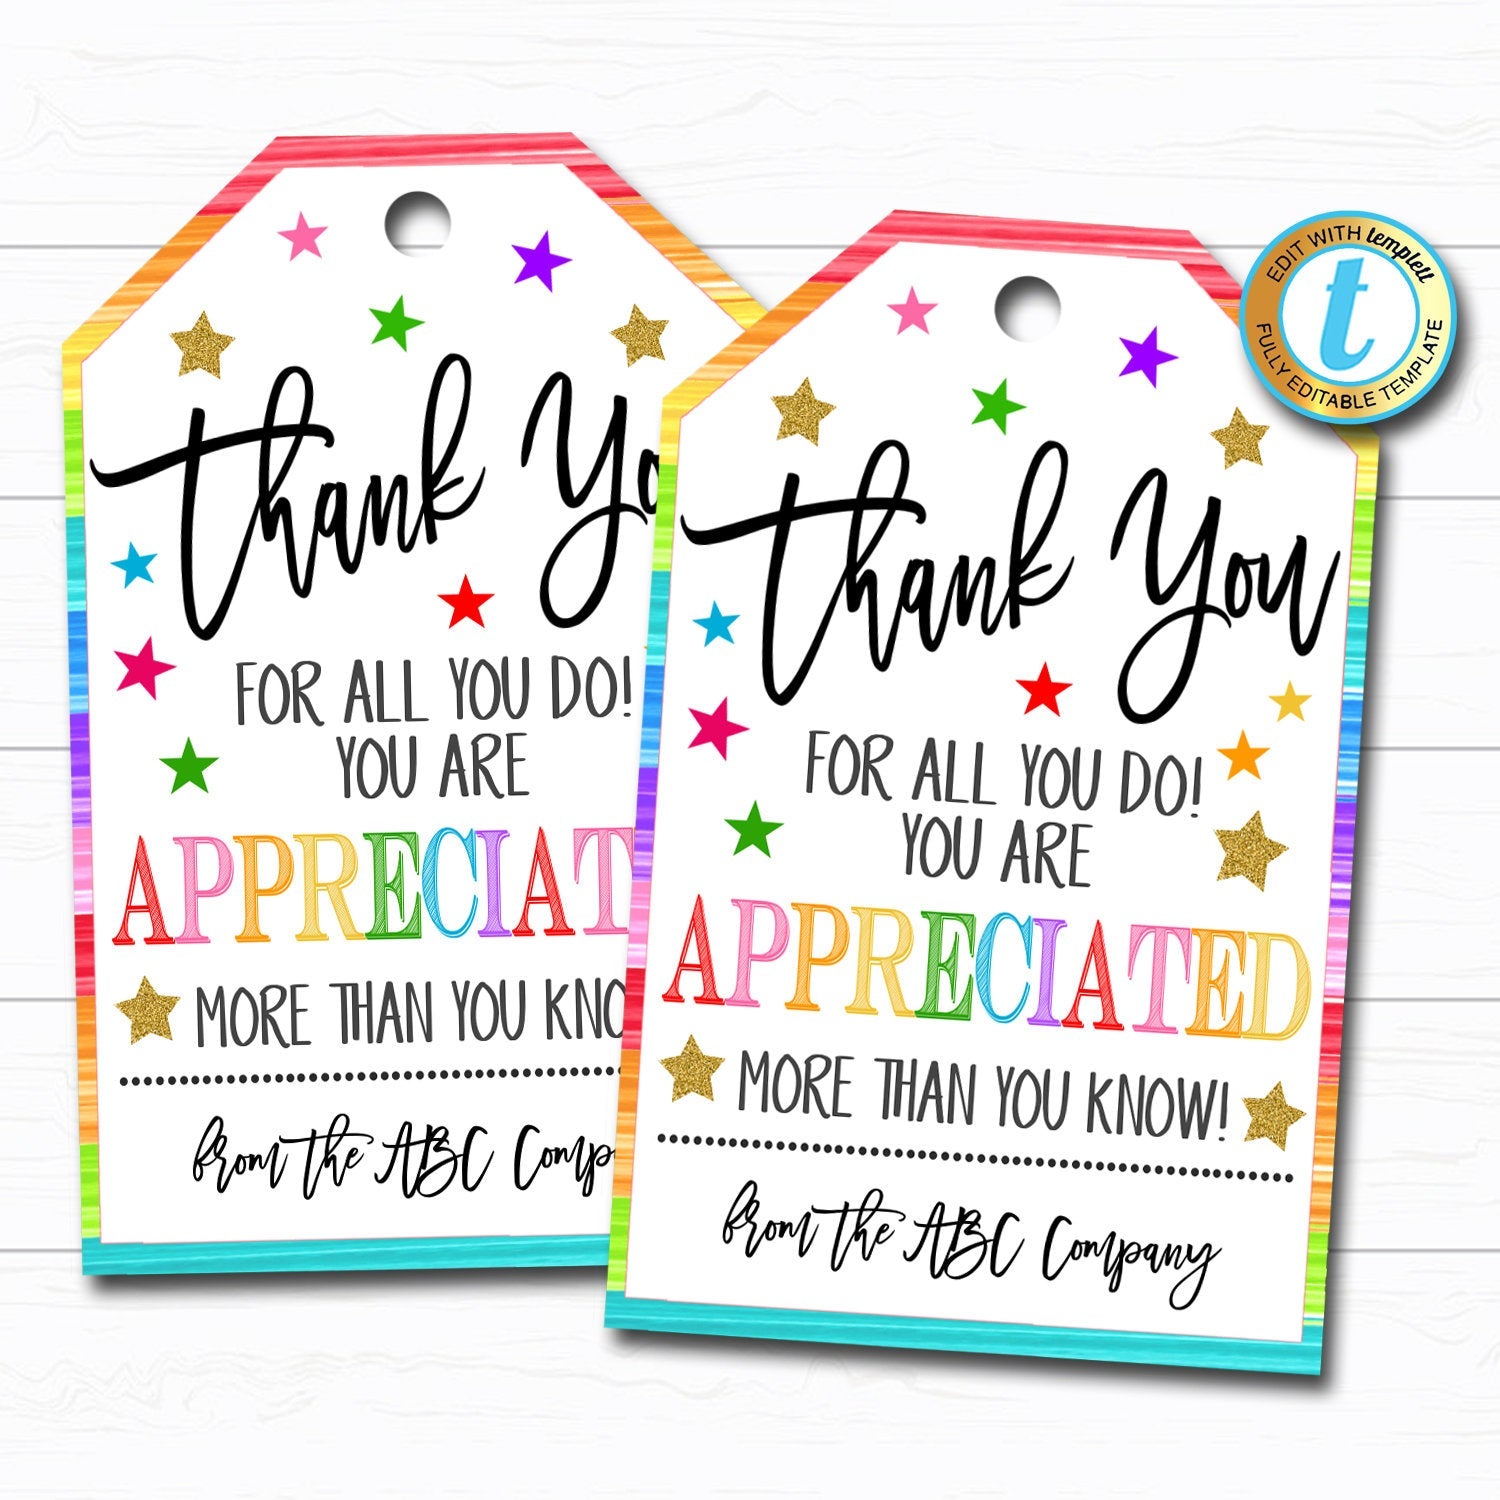 Employee Appreciation Card Templates